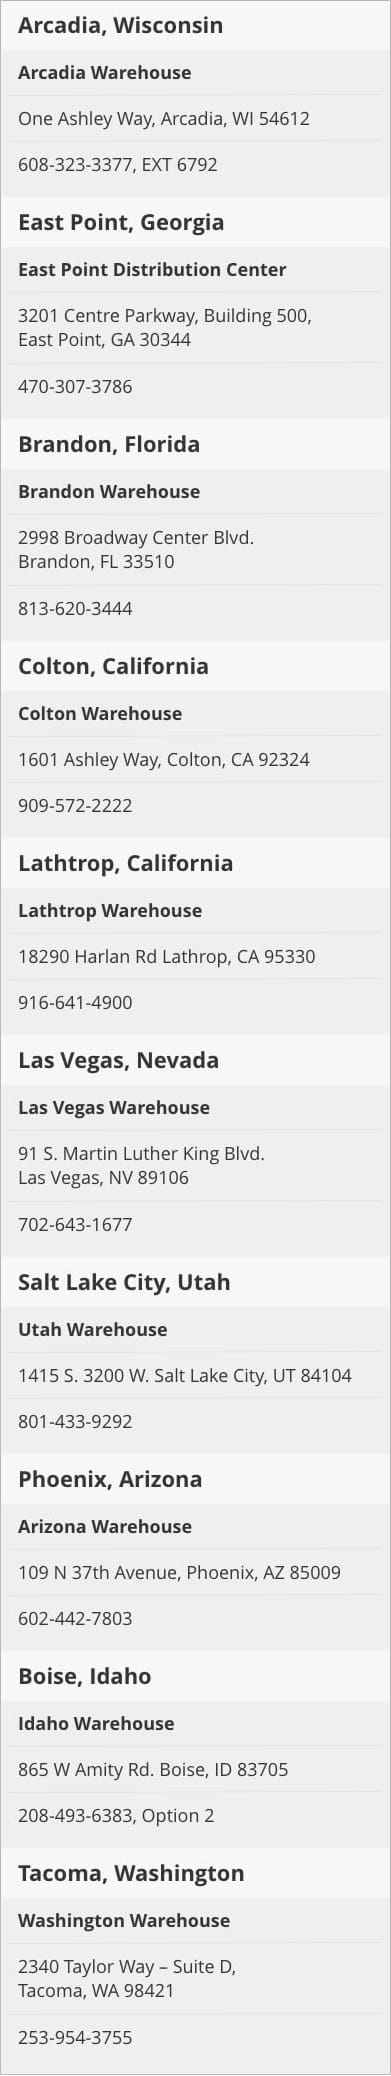 Warehouse Pickup Locations